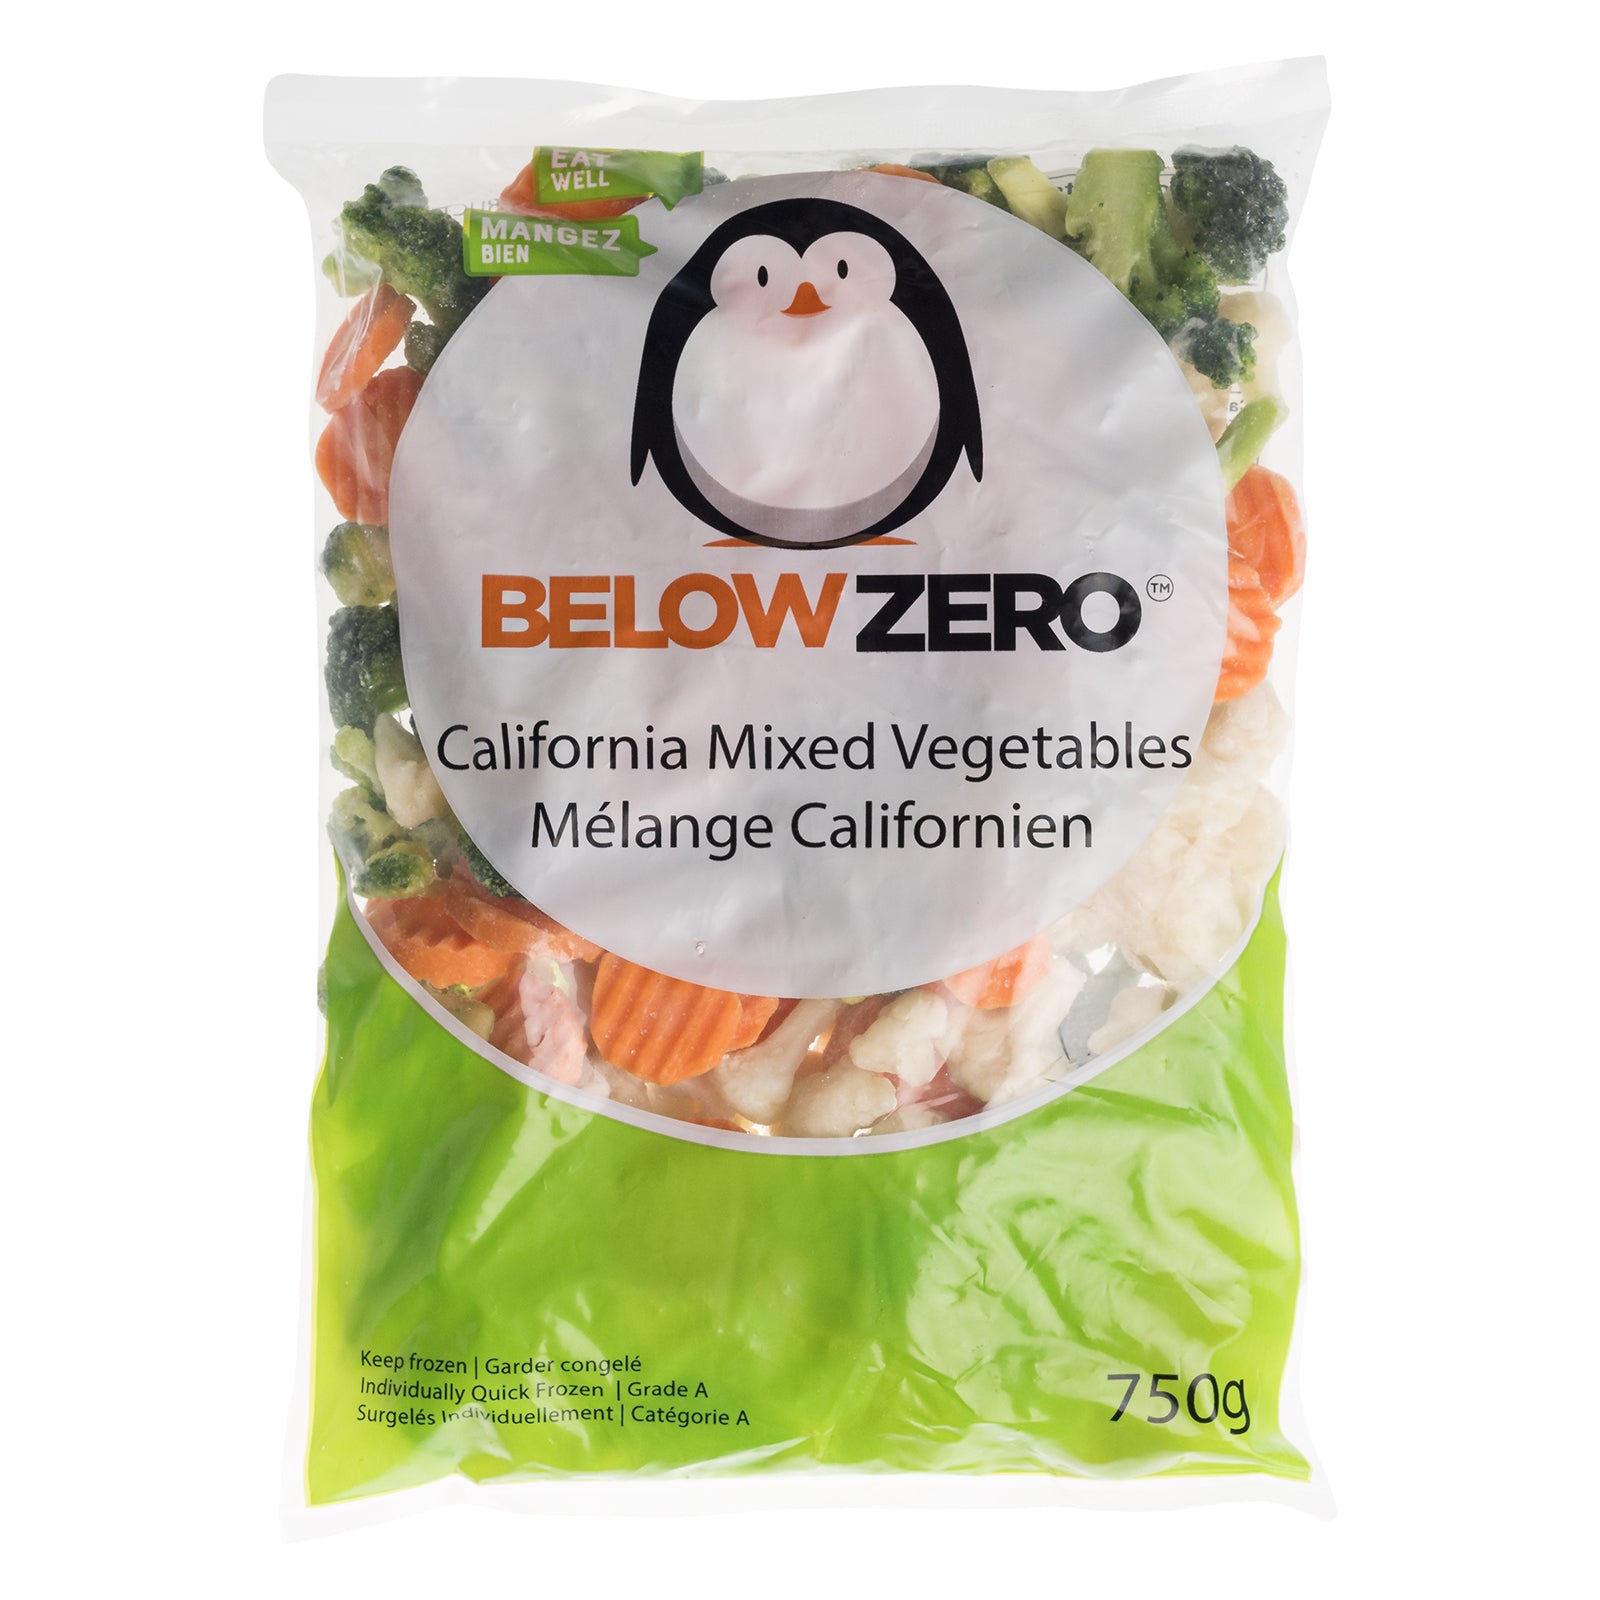 BELOW ZERO California Mixed Vegetables